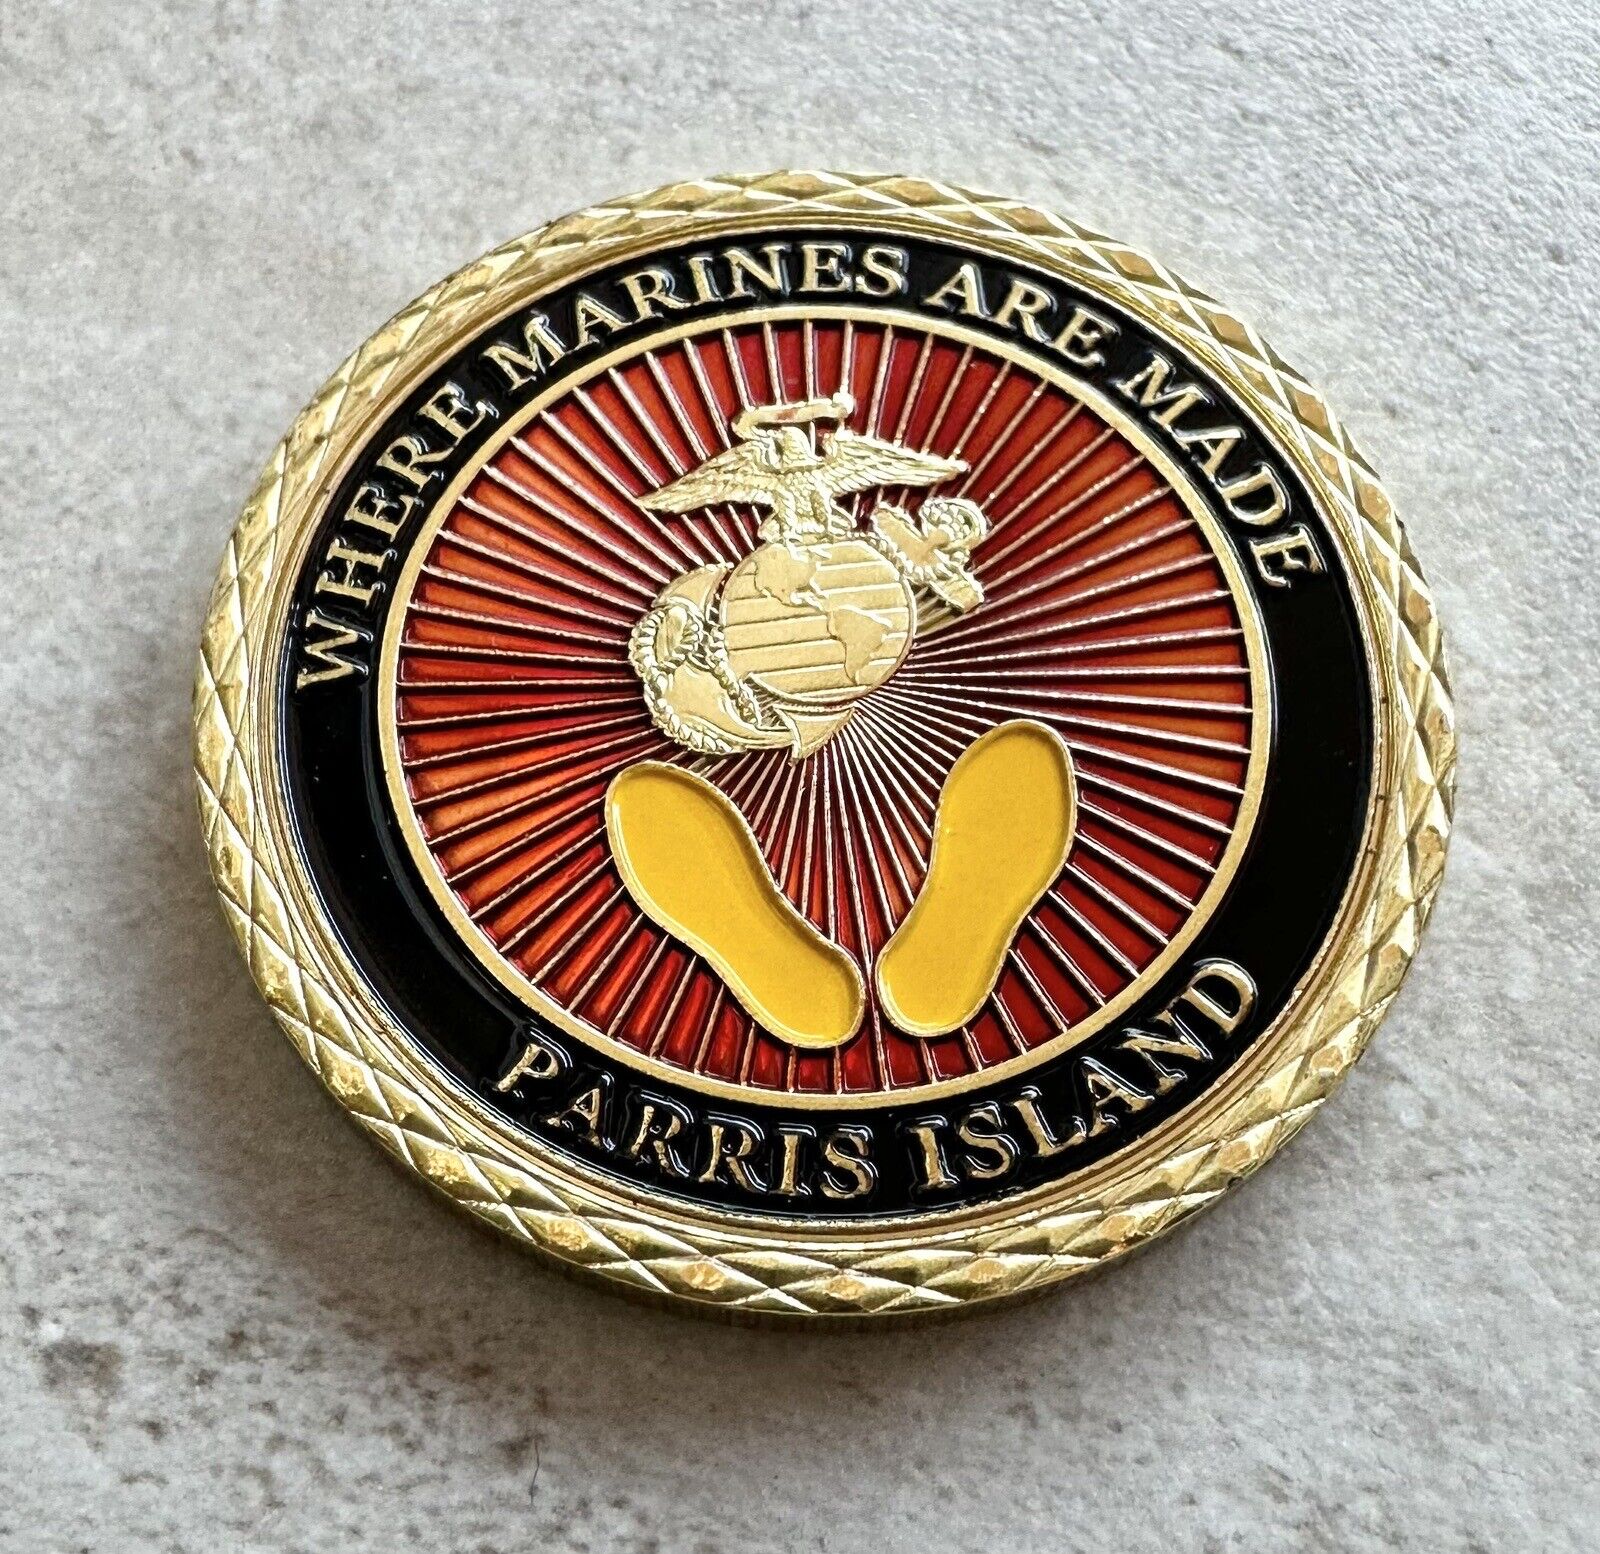 PARRIS ISLAND - USMC RECRUIT DEPOT Challenge Coin